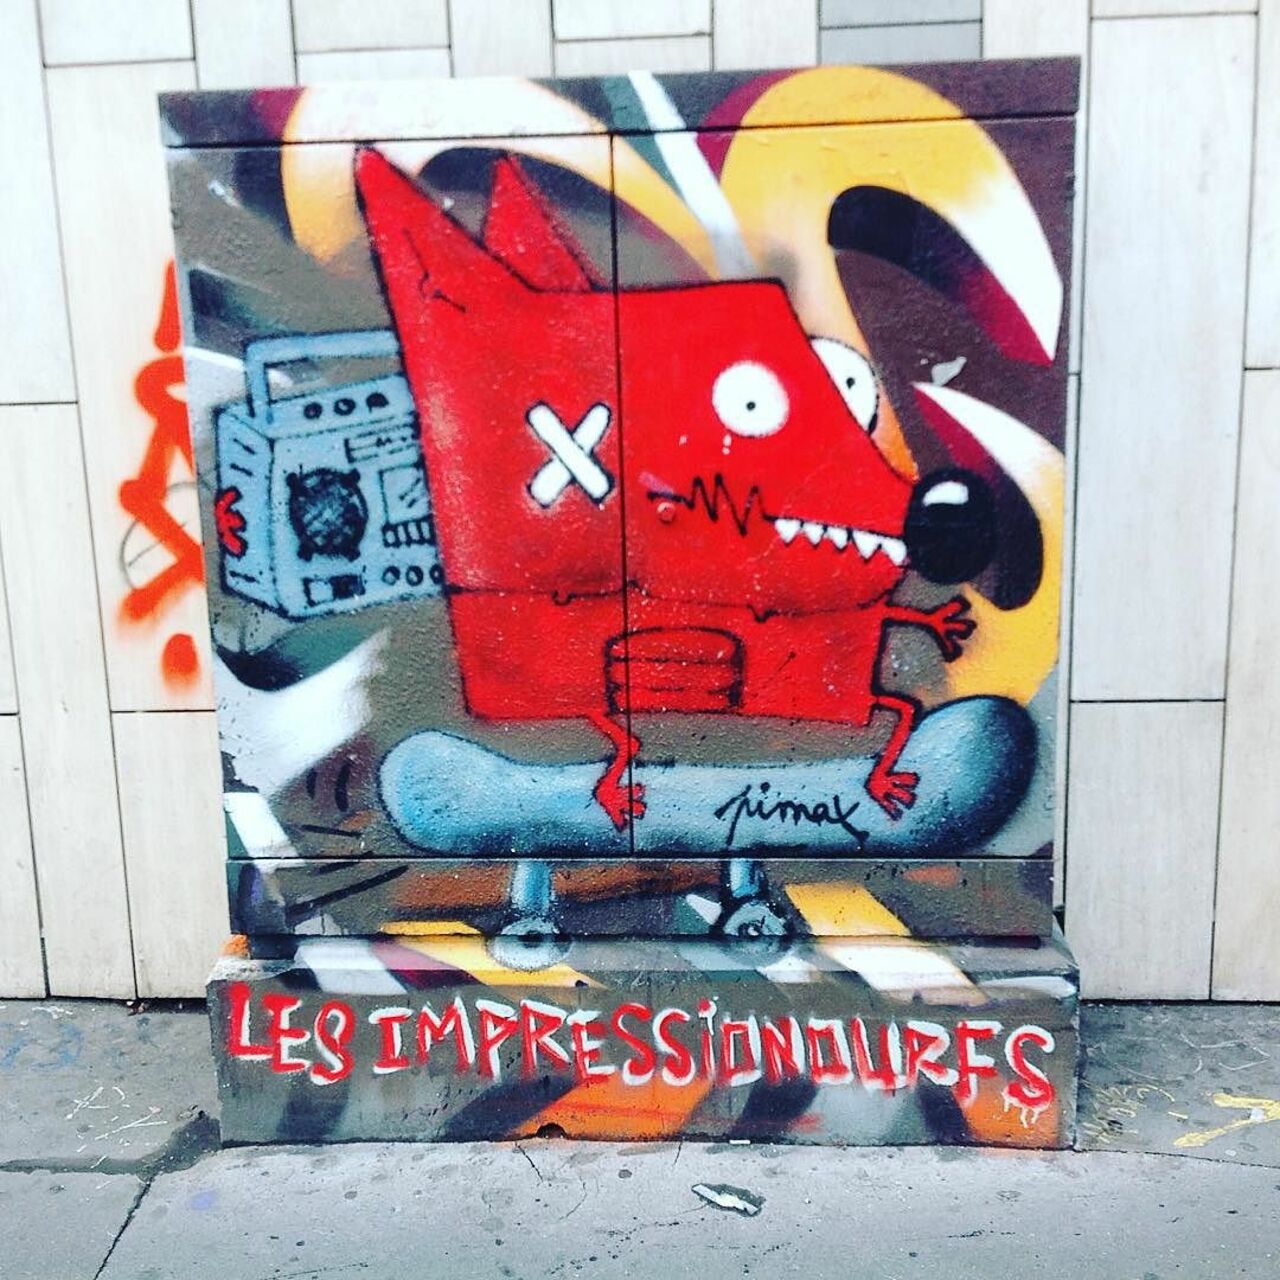 #Paris #graffiti photo by @stefetlinda http://ift.tt/1XlnYCE #StreetArt https://t.co/ILnU1e4mFs